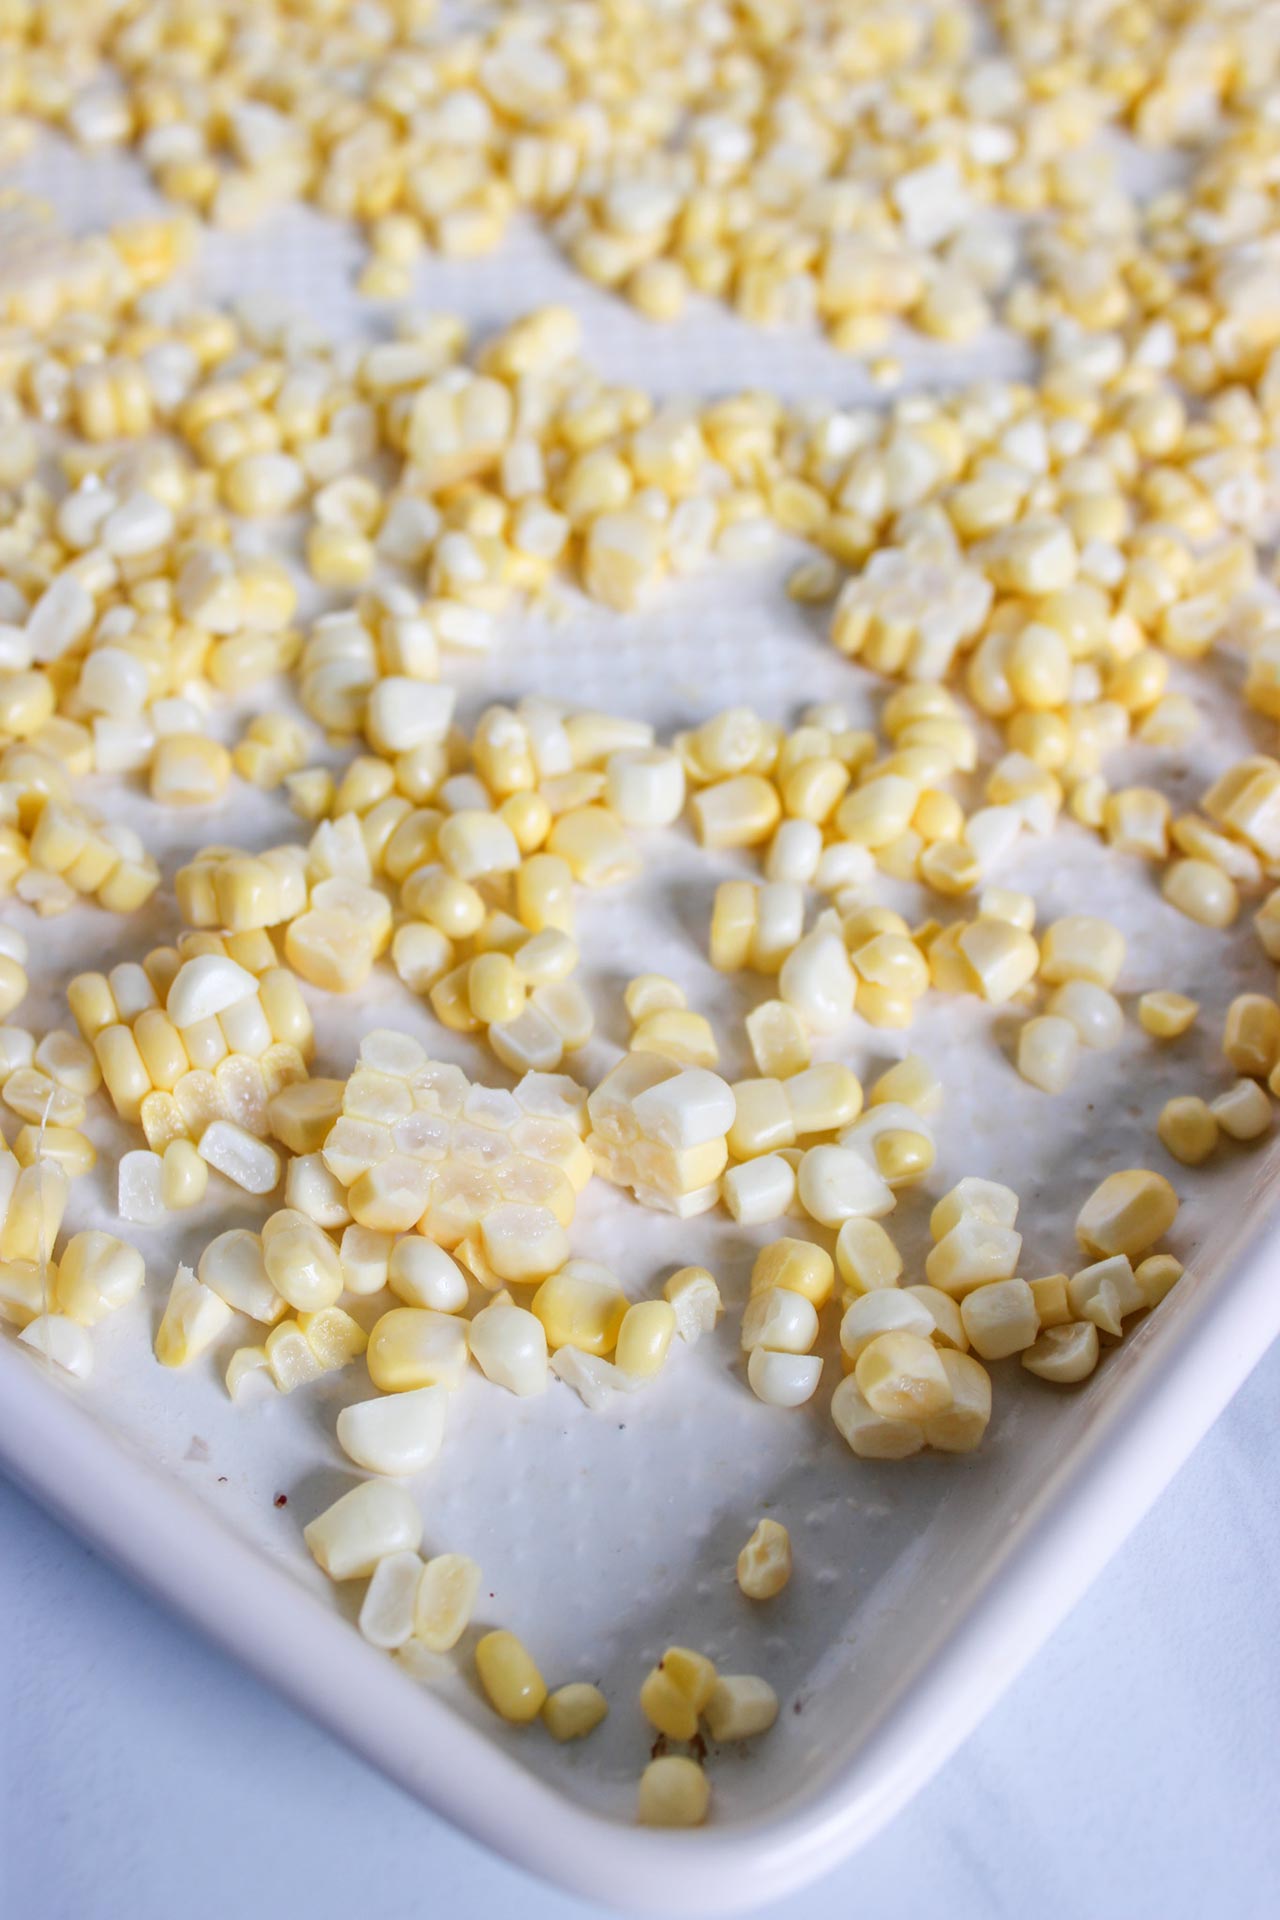 Raw corn kernels on a sheet pan.